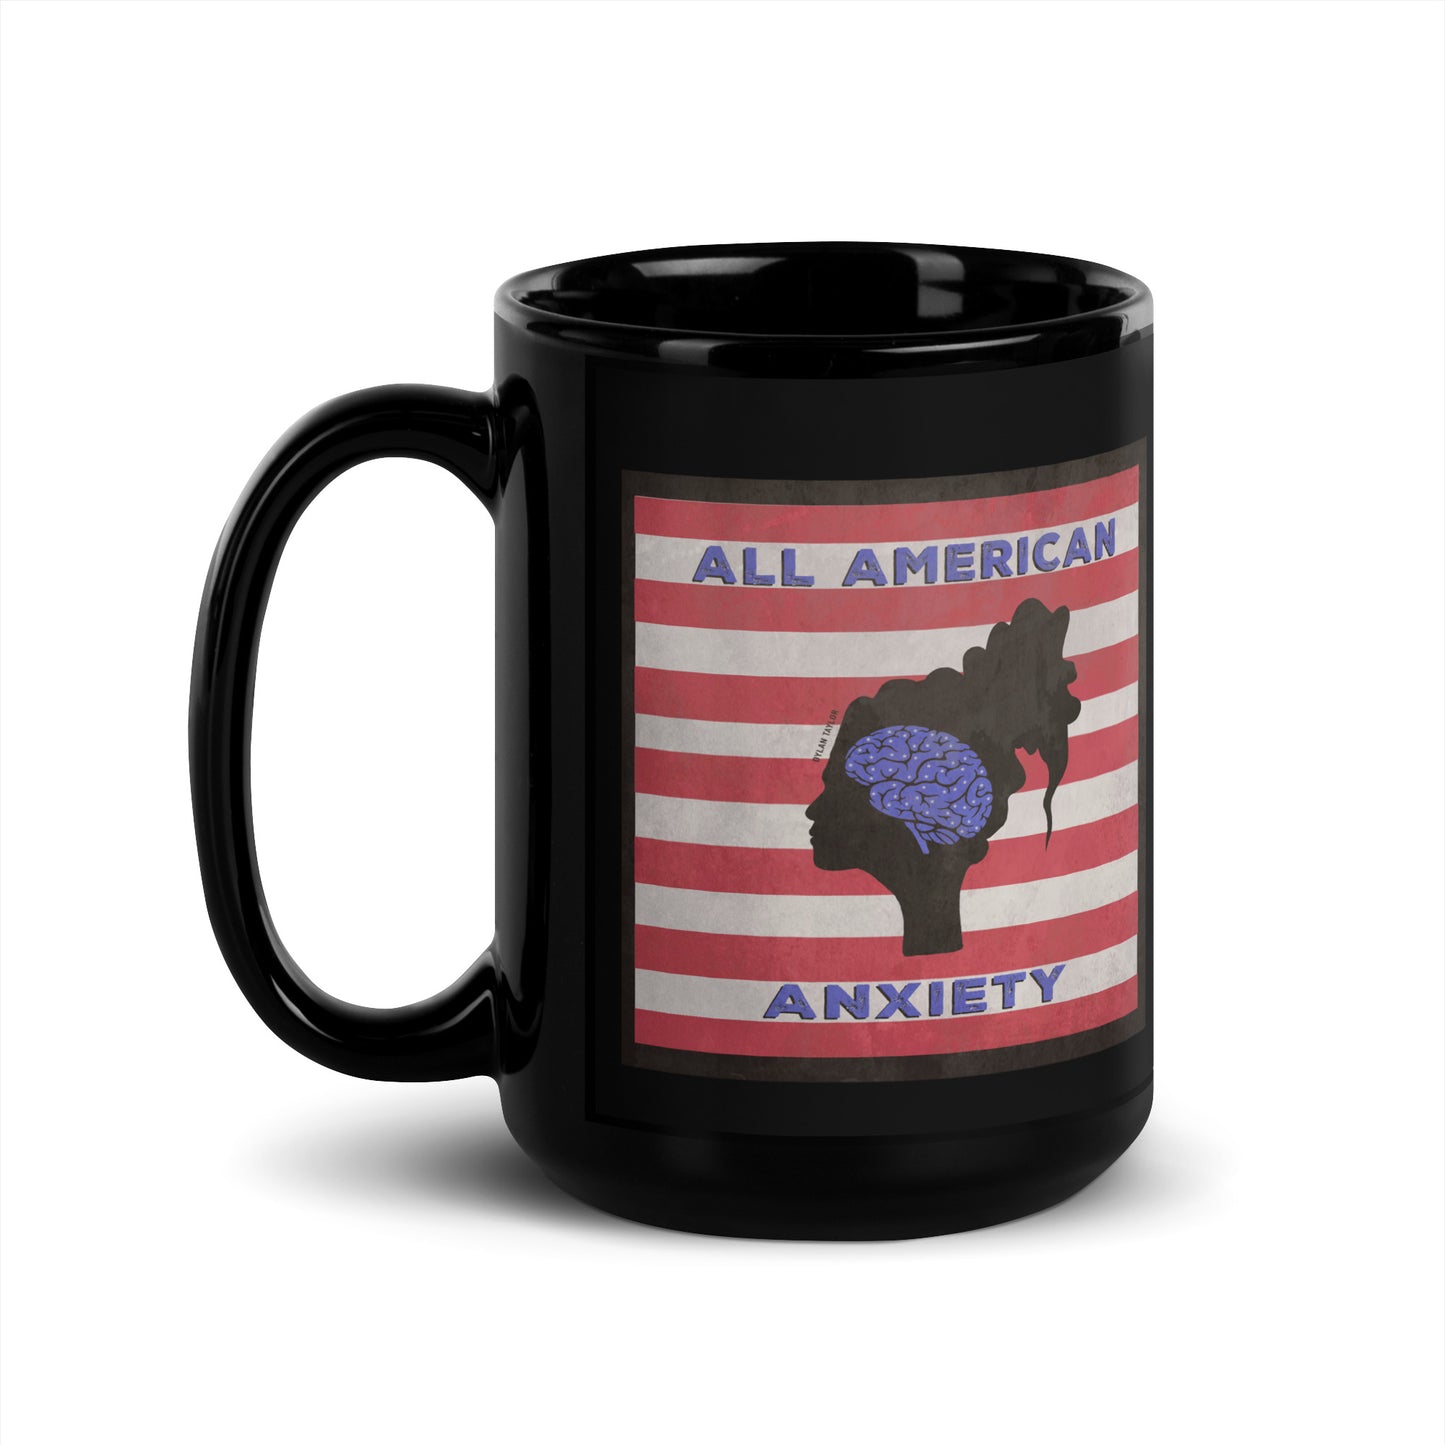 All American Anxiety Mug